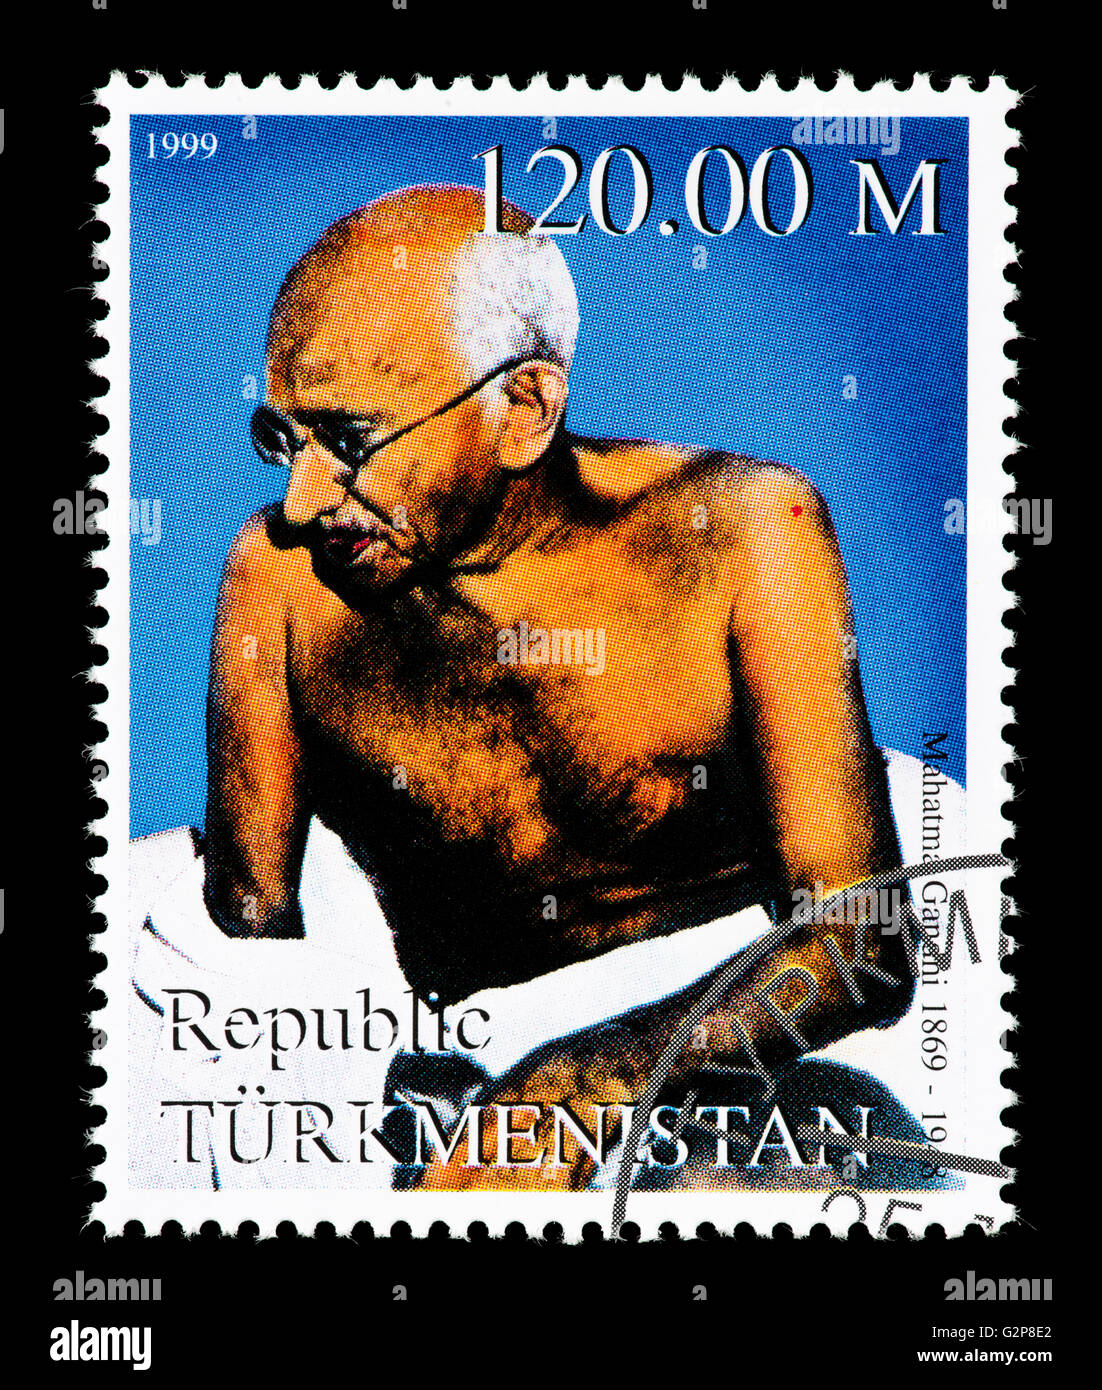 Postage stamp from Turkmenistan depicting Mohandas Karamchand Gandhi, Indian independence movement leader. Stock Photo